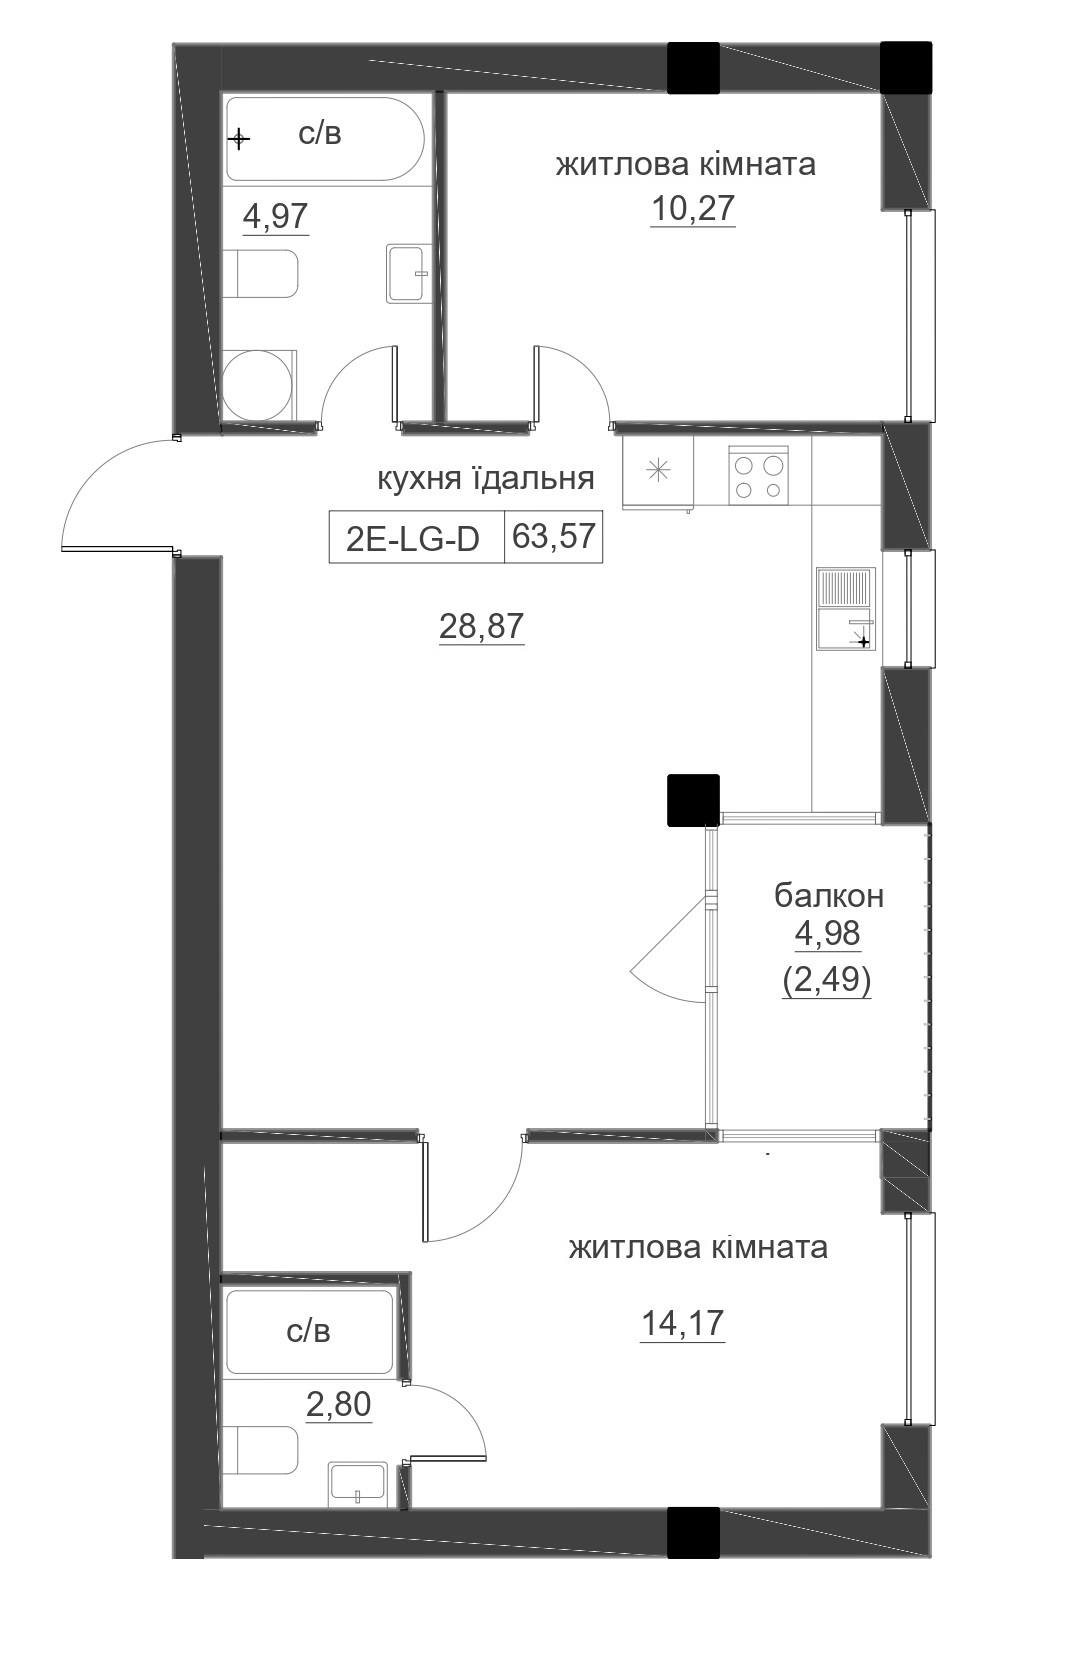 Planning 2-rm flats area 63.57m2, LR-005-06/0006.